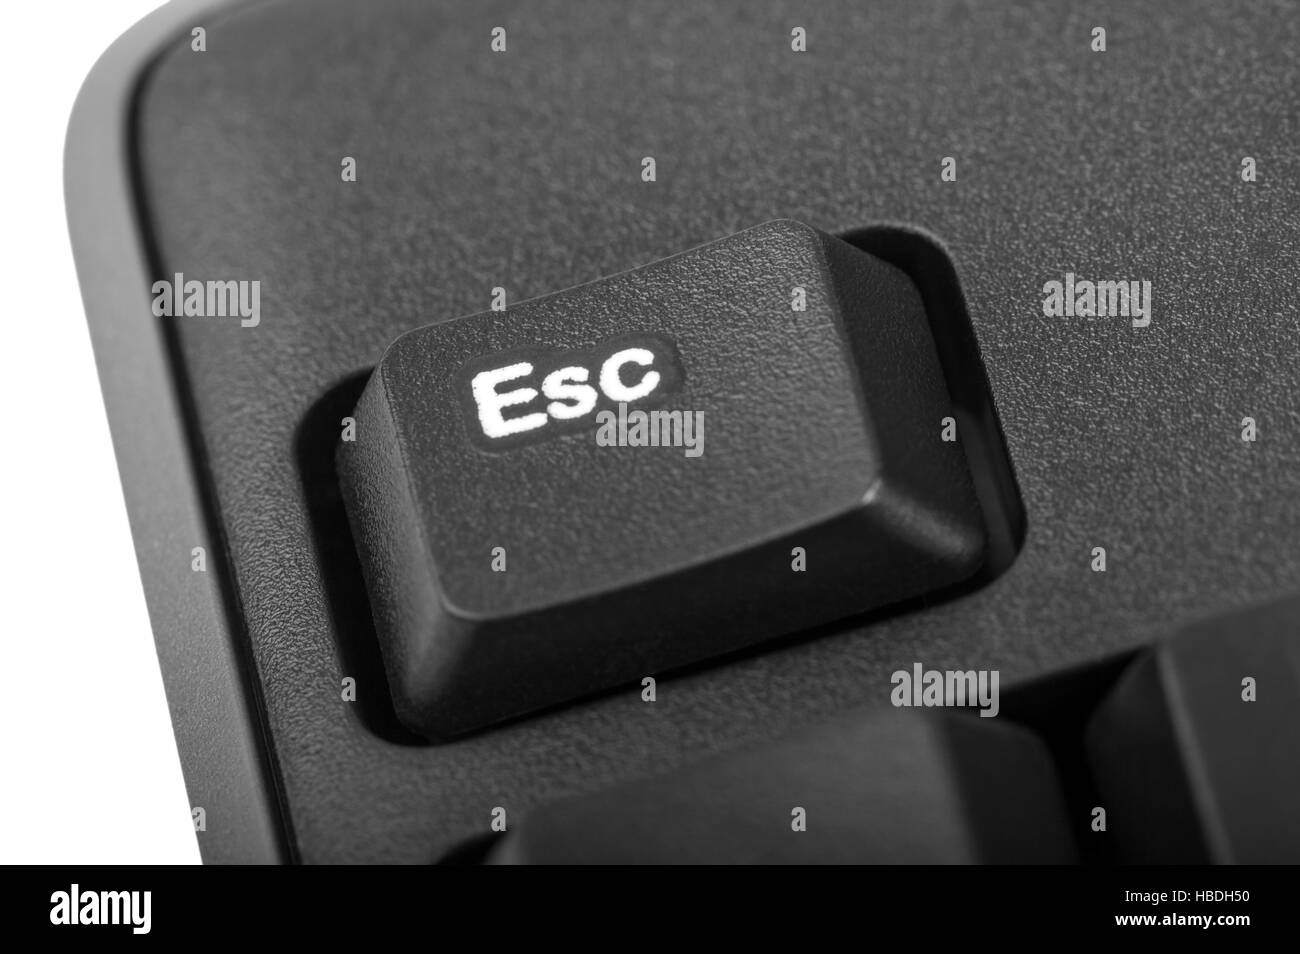 Esc key Black and White Stock Photos & Images - Alamy